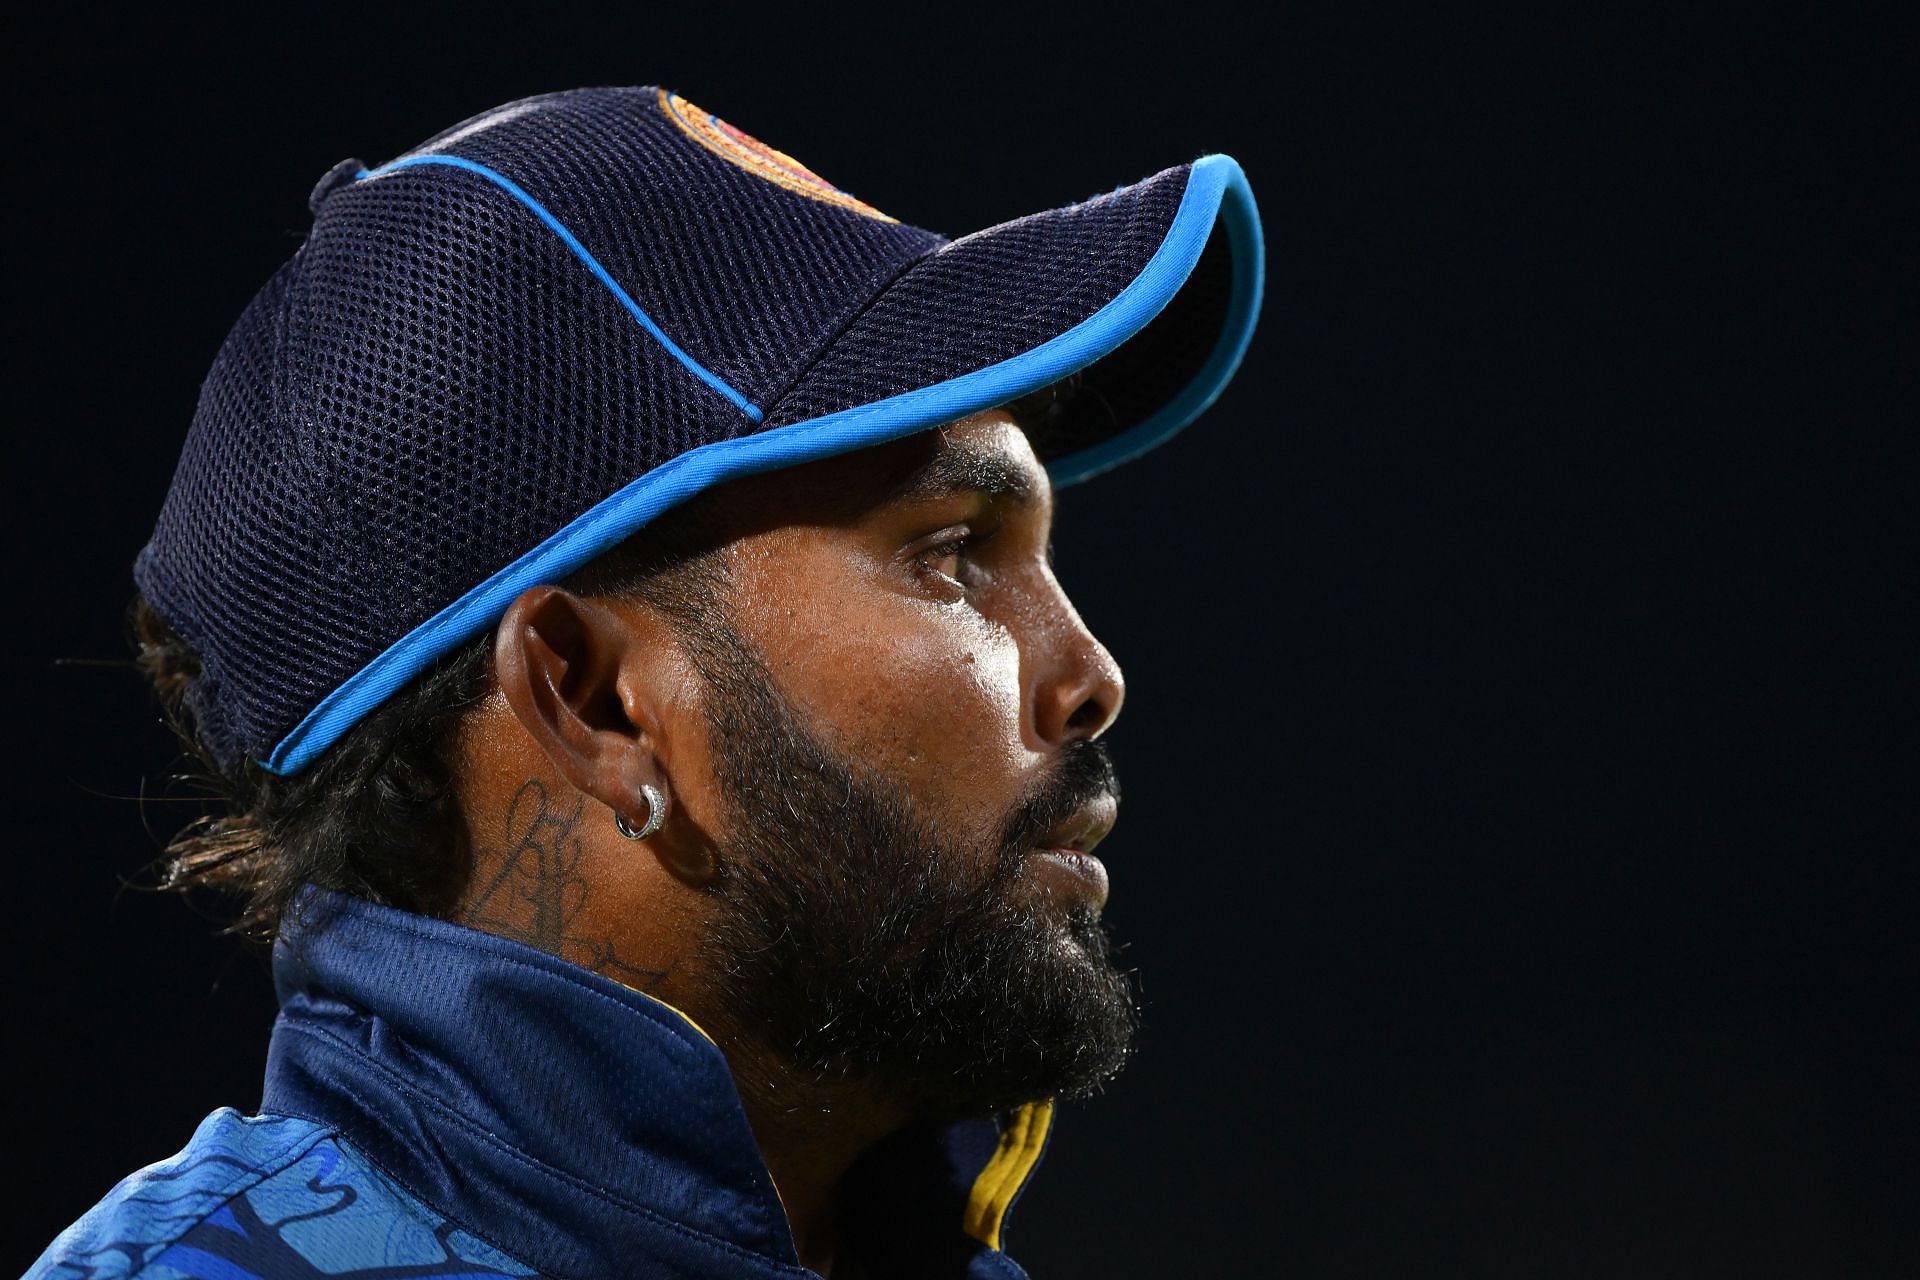 Wanindu Hasaranga ruled out of remainder of India ODI series with hamstring injury